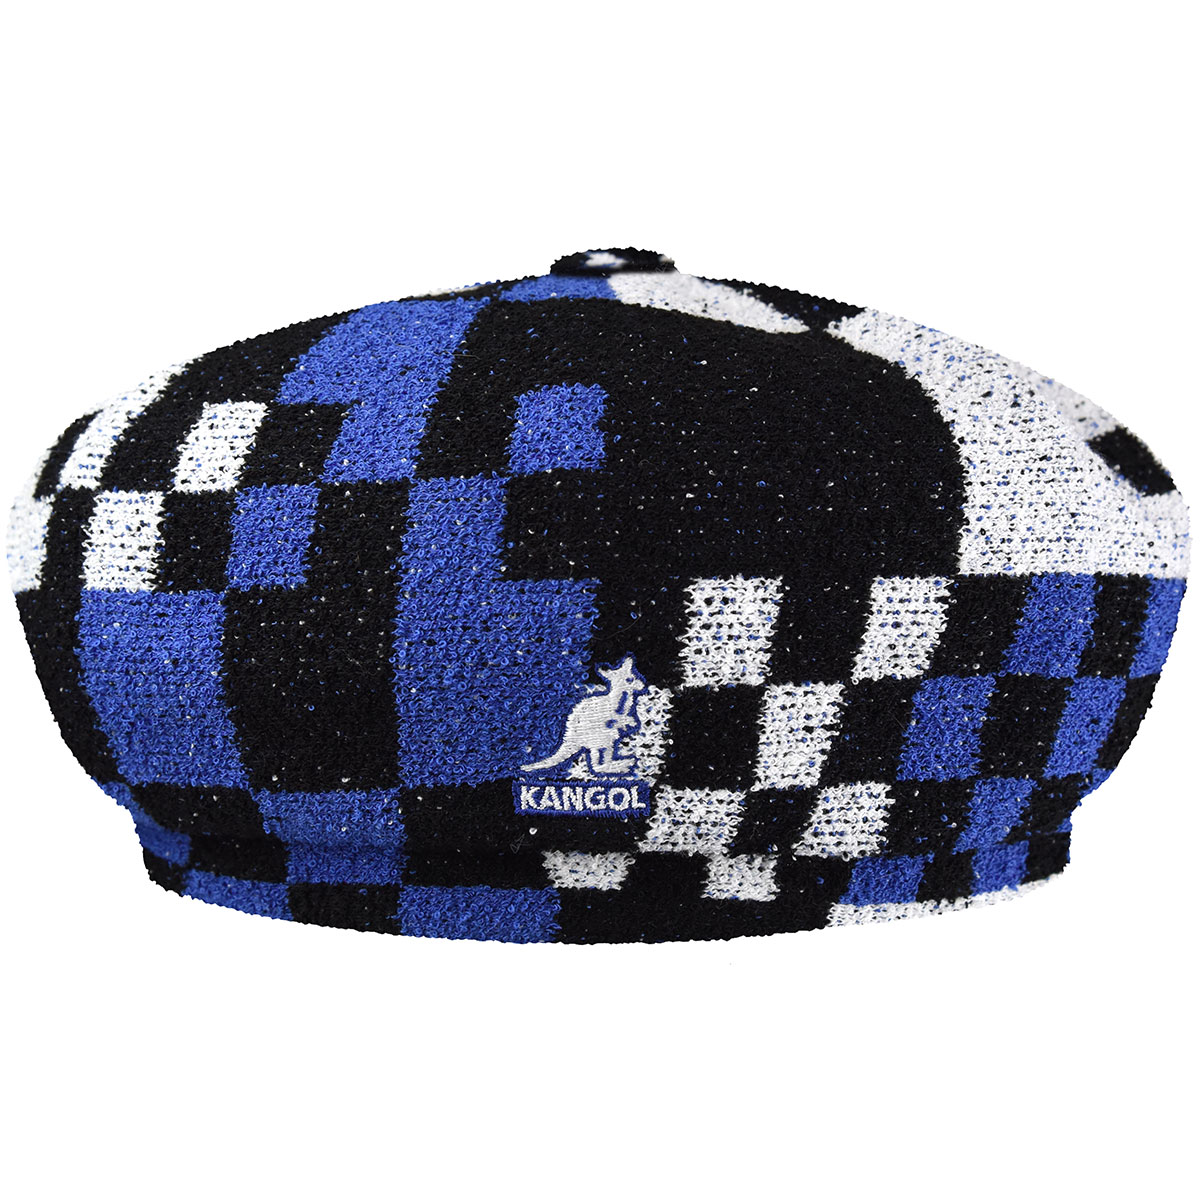 Hats - Starry Blue/Black